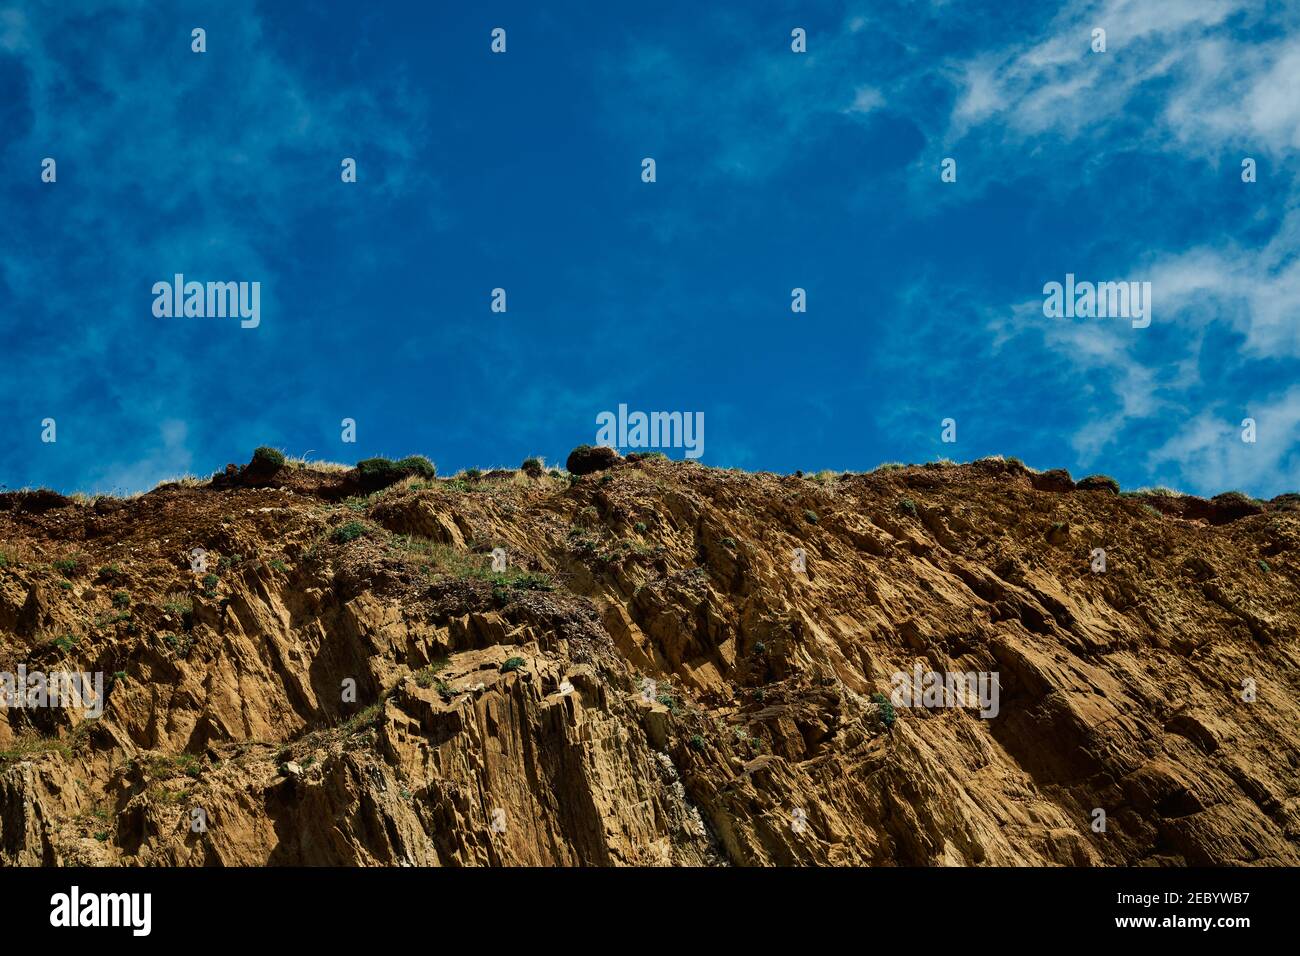 Rocks on a hillside against a bright blue sky Stock Photo